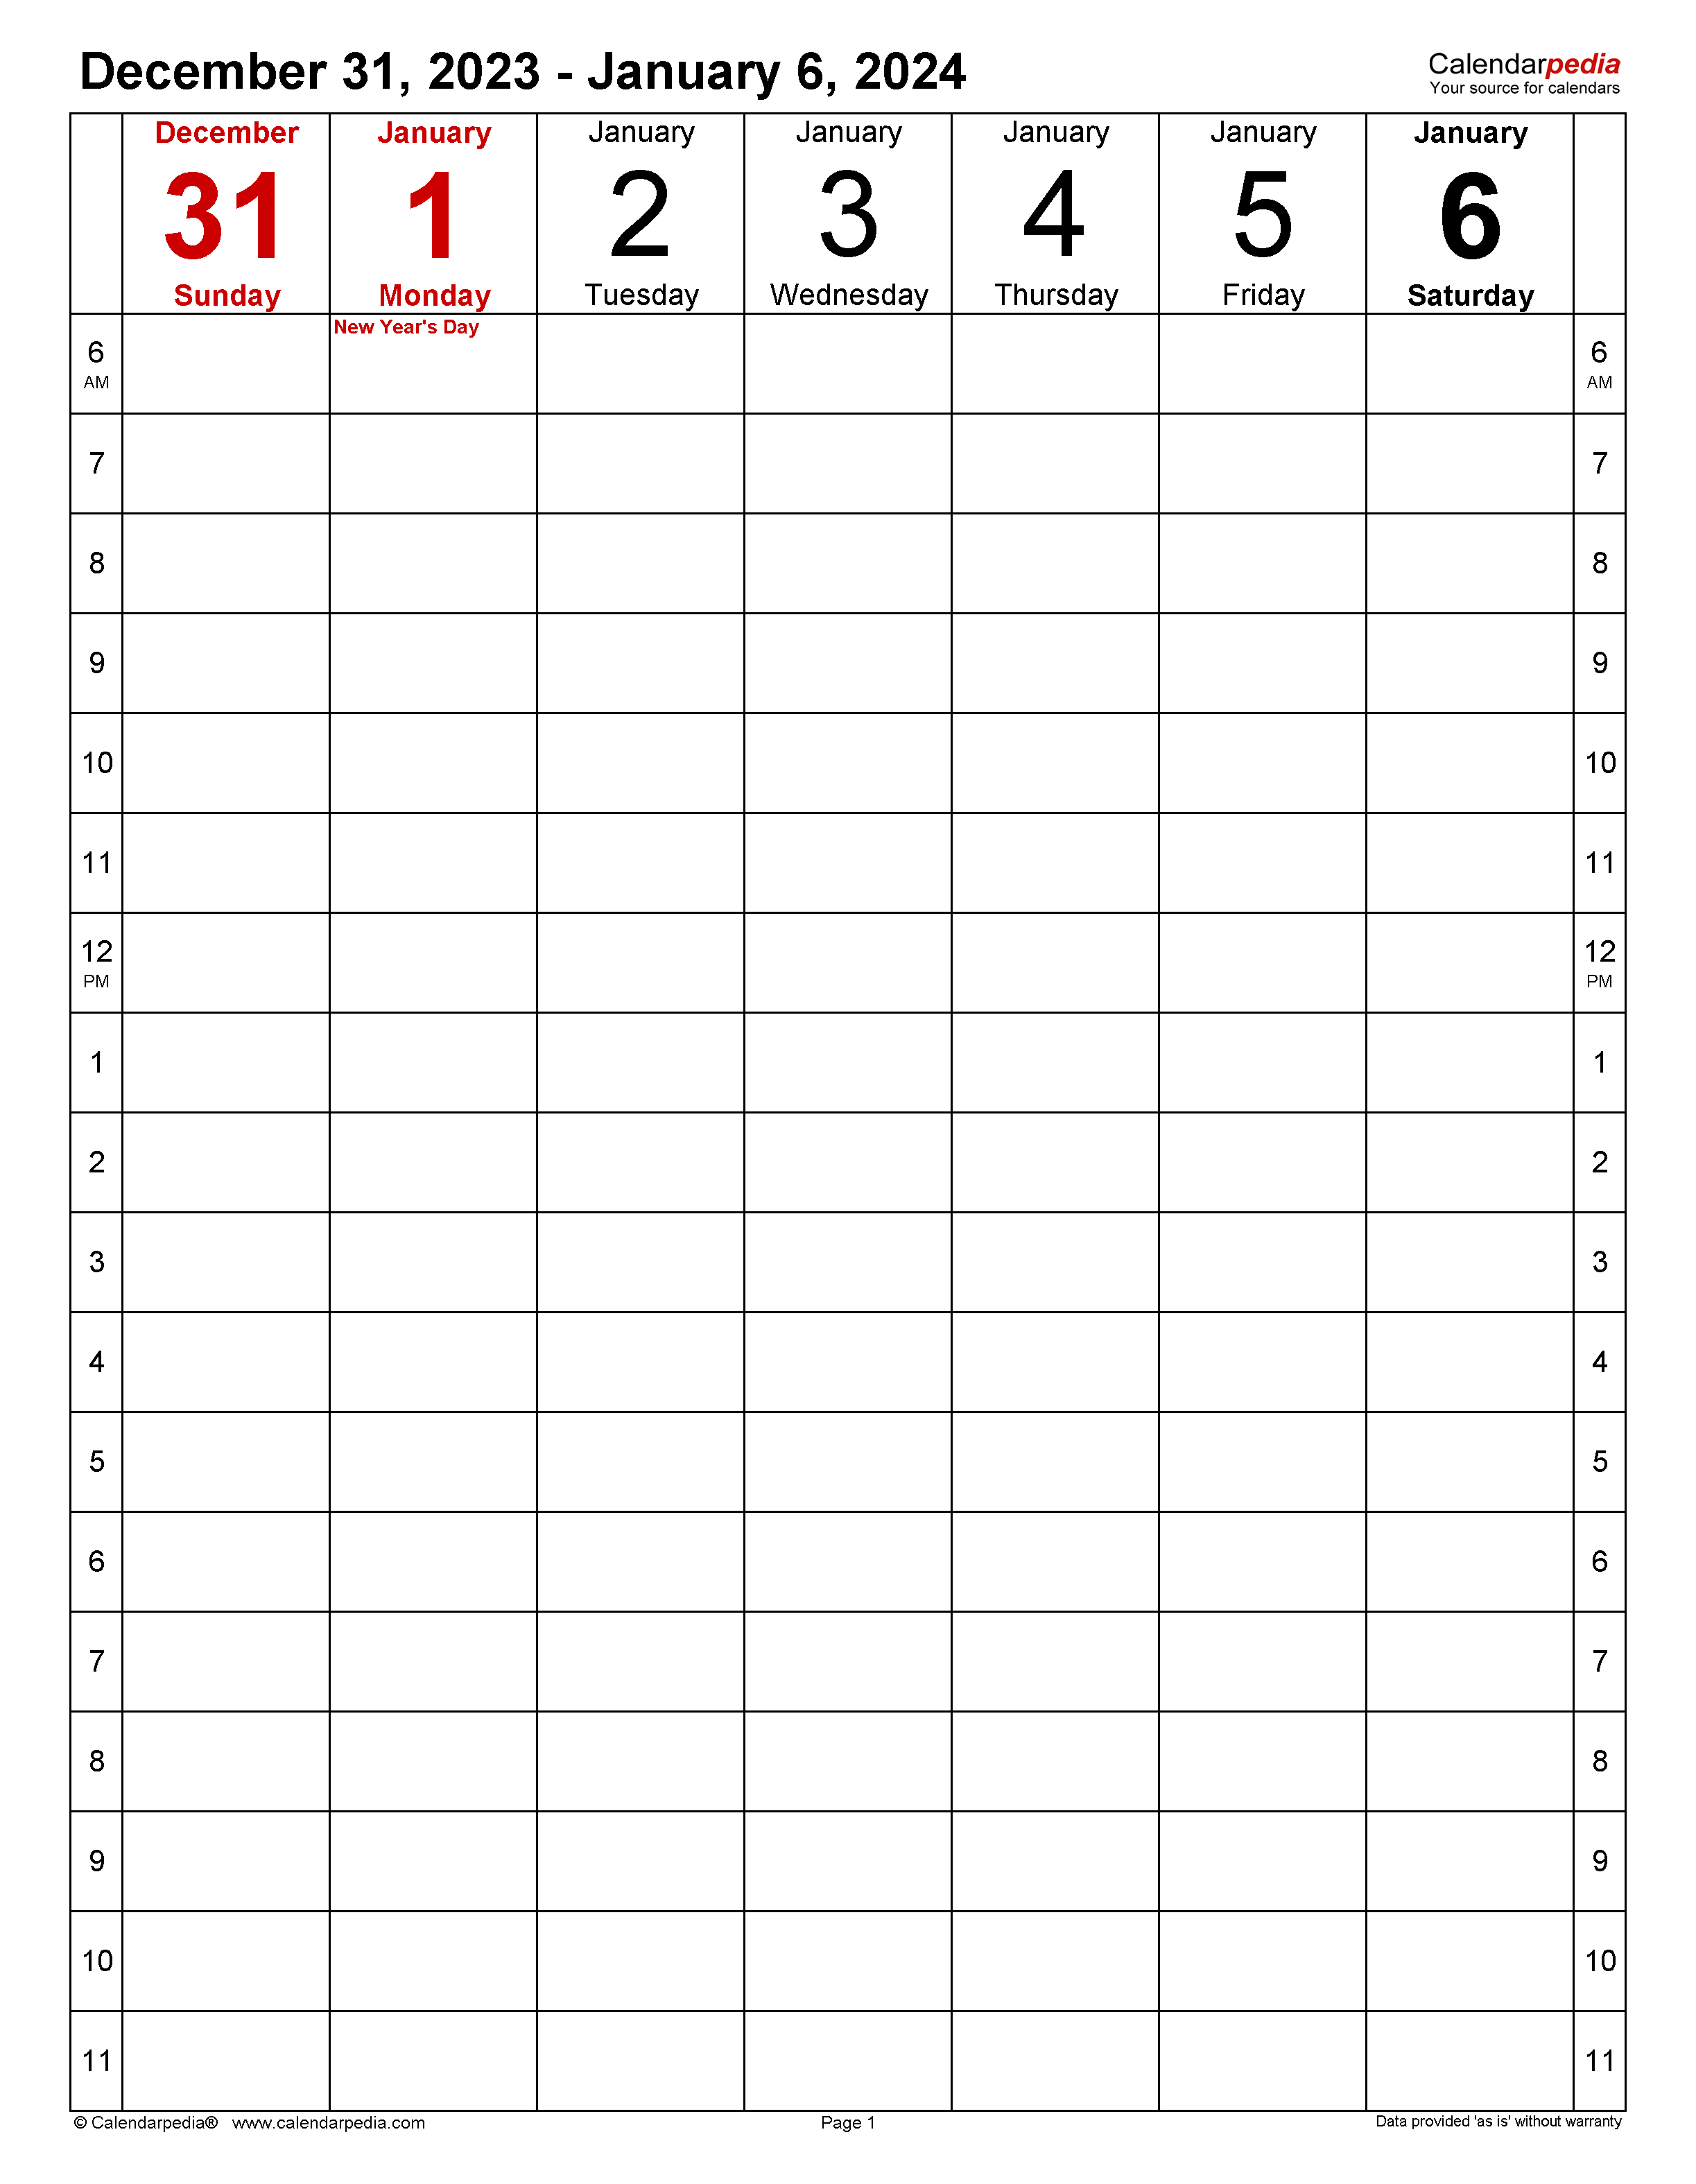 Weekly Calendars 2024 For Pdf - 12 Free Printable Templates for Weekly Calendar Printable 2024